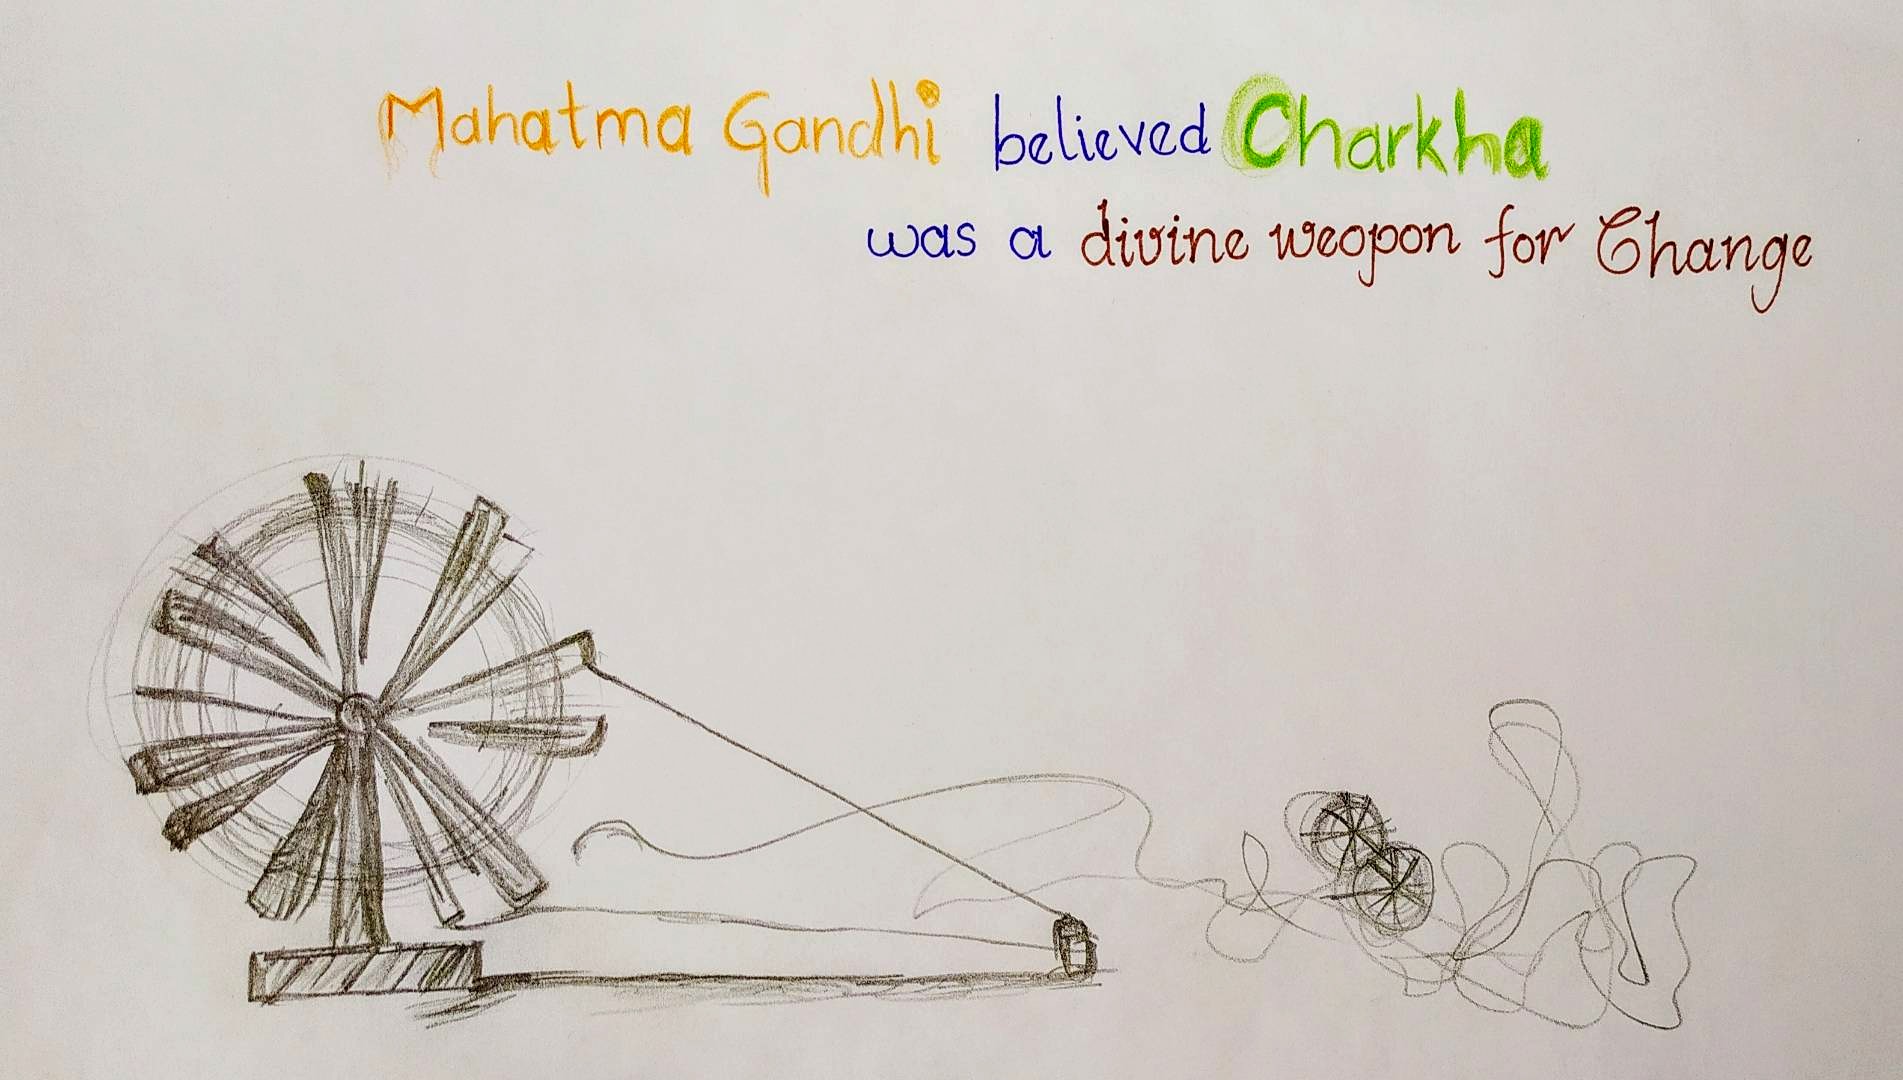 perfection drawing on X How to draw Mahatma Gandhi drawing with charkha  on Gandhi Jayanti mohandaskaramchandgandhi mahatmagandhi gandhi bapu  mahatma httpstcow9hgIXCXkV httpstcopTYYqIeelU  X